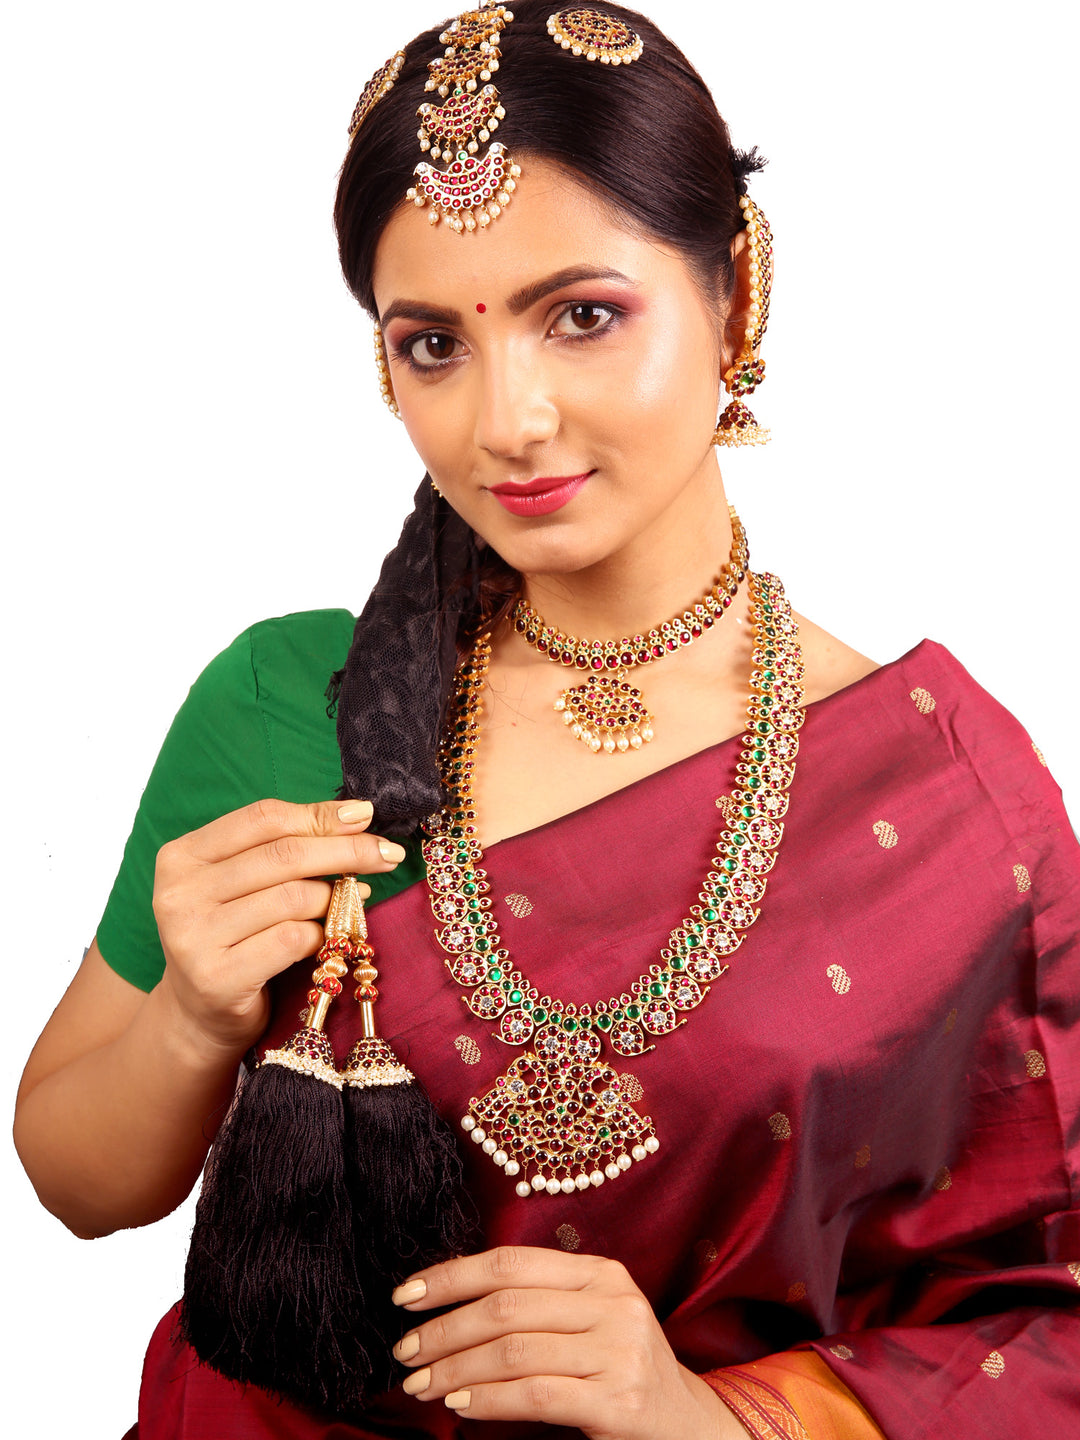 925 silver Kunjalam/Kunjala - gold polish silver - temple design - Sterling silver Kunjala - Indian traditional jewelry – wedding jewelry – bridal jewelry – festival jewelry - Dance jewelry- Gifts